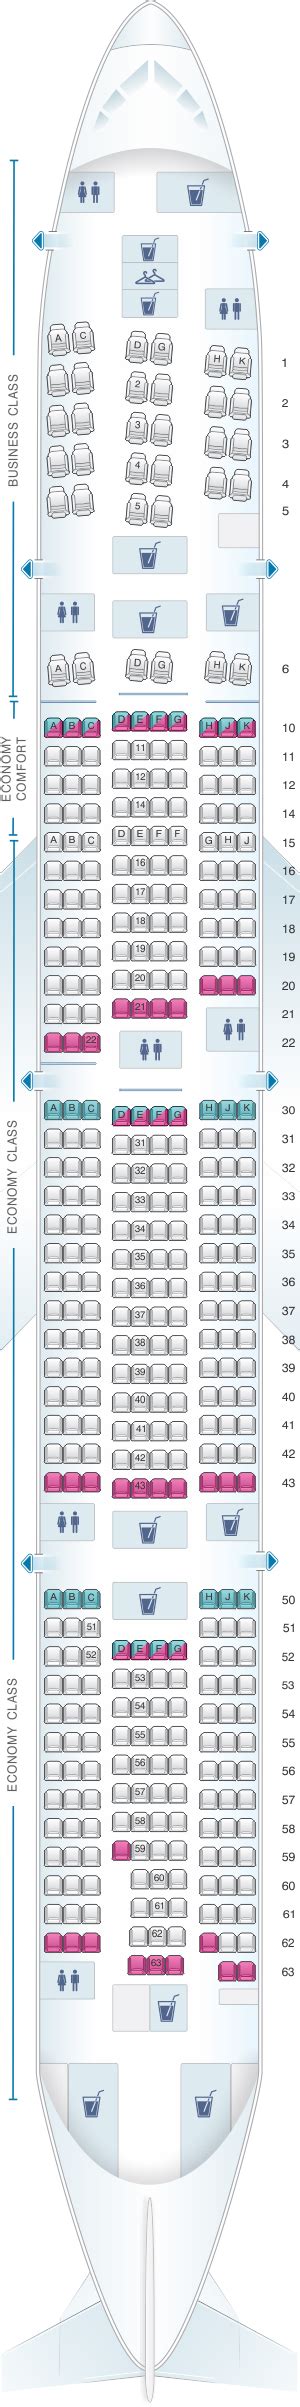 Boeing 777 Wide Body Jet Seating Chart Ponasa